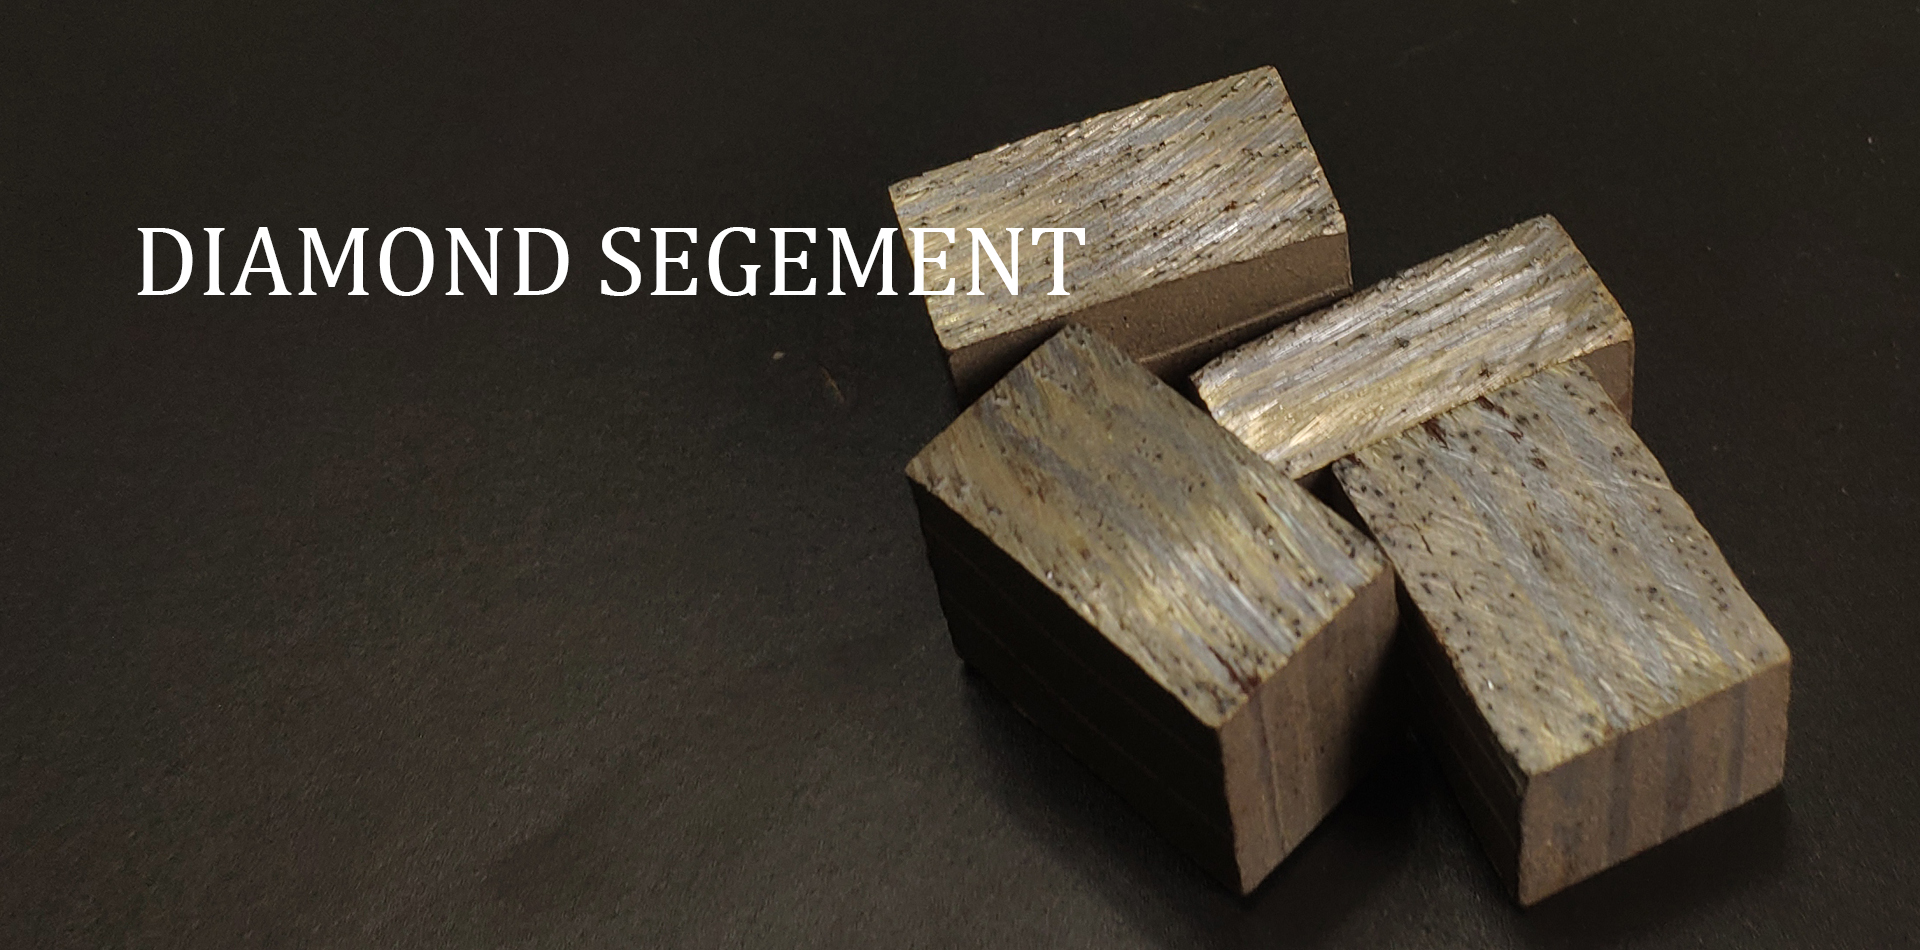 Diamond segments, diamond cutting segment, diamond segment for block cutting